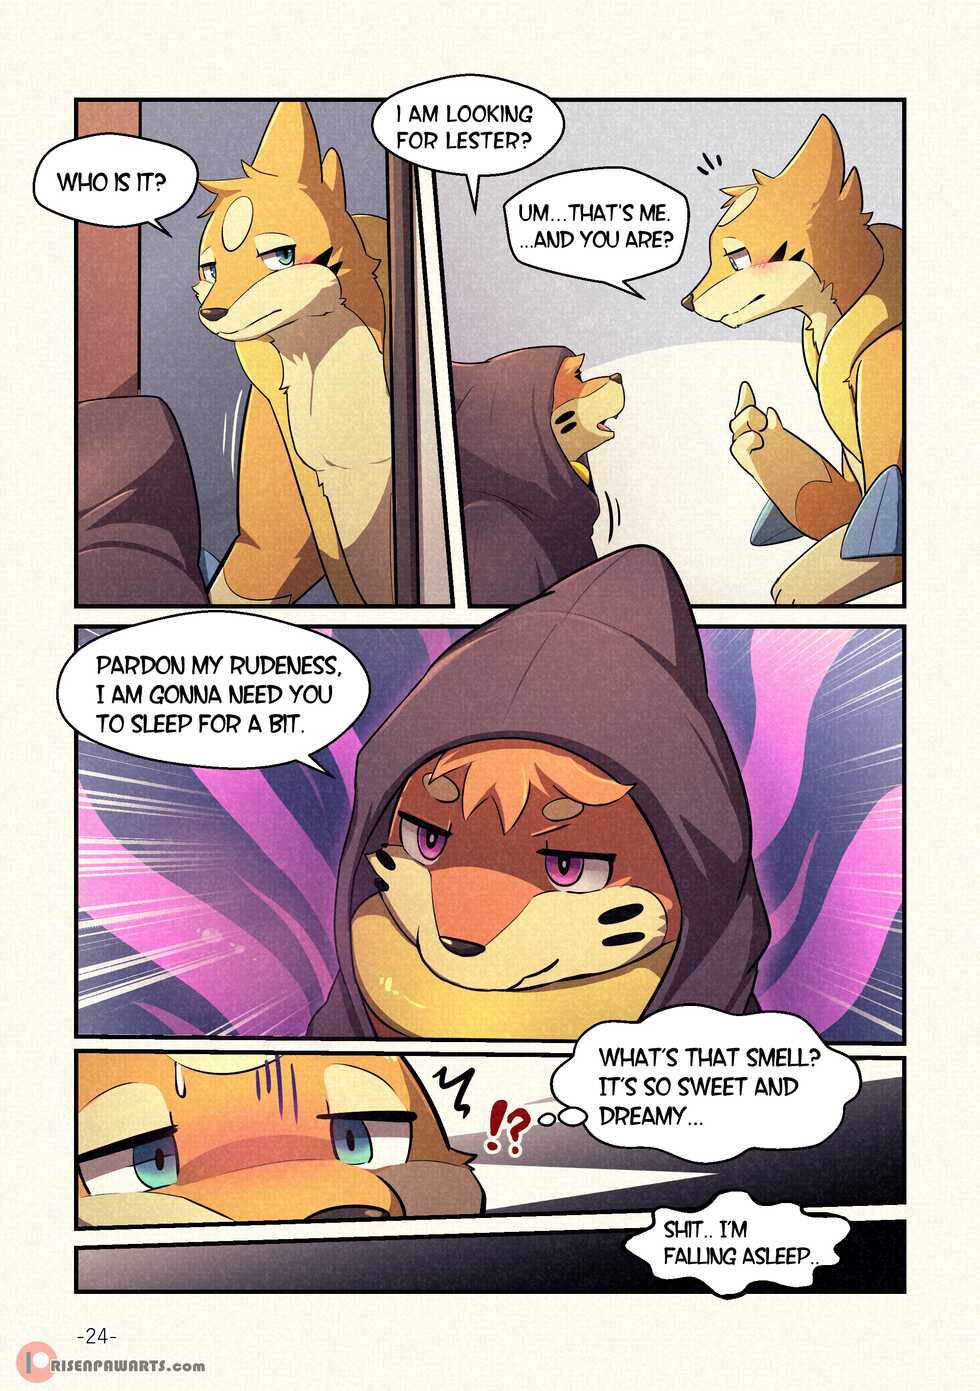 [RisenPaw] The Fulll Moon Part 2 (Pokemon) (In progress) - Page 22